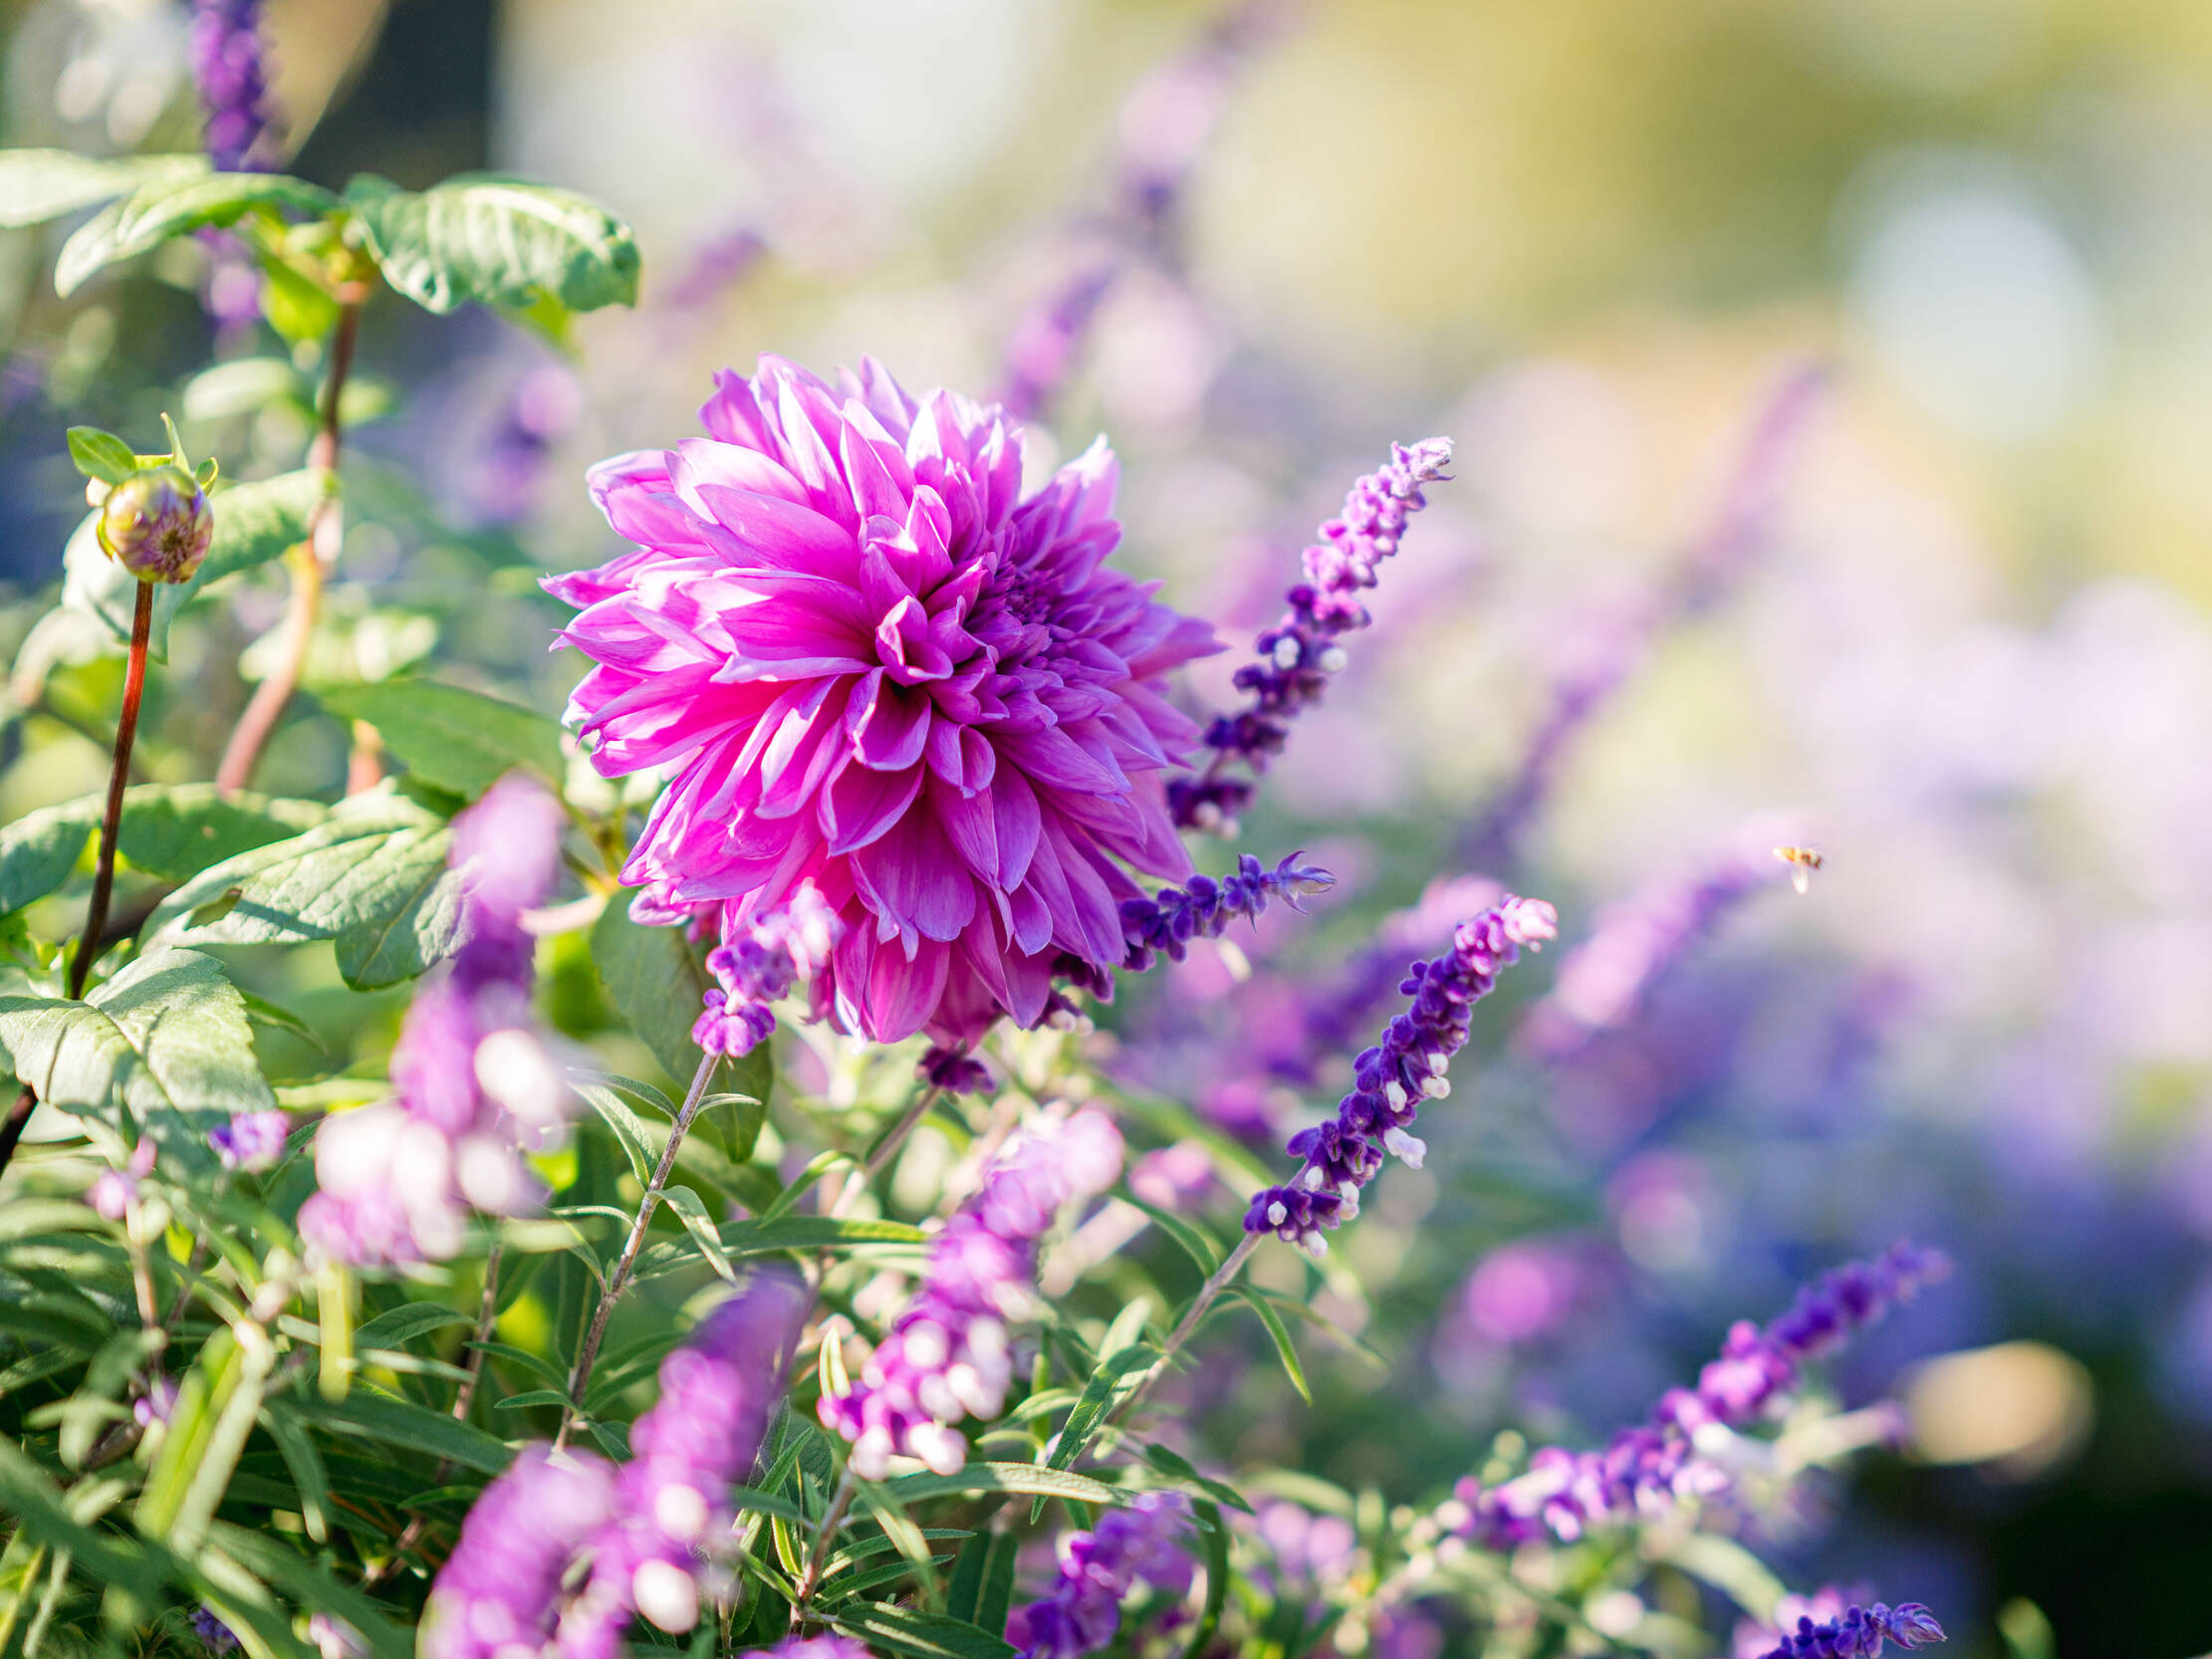 Vivid purple flowers bloom in the sunlight